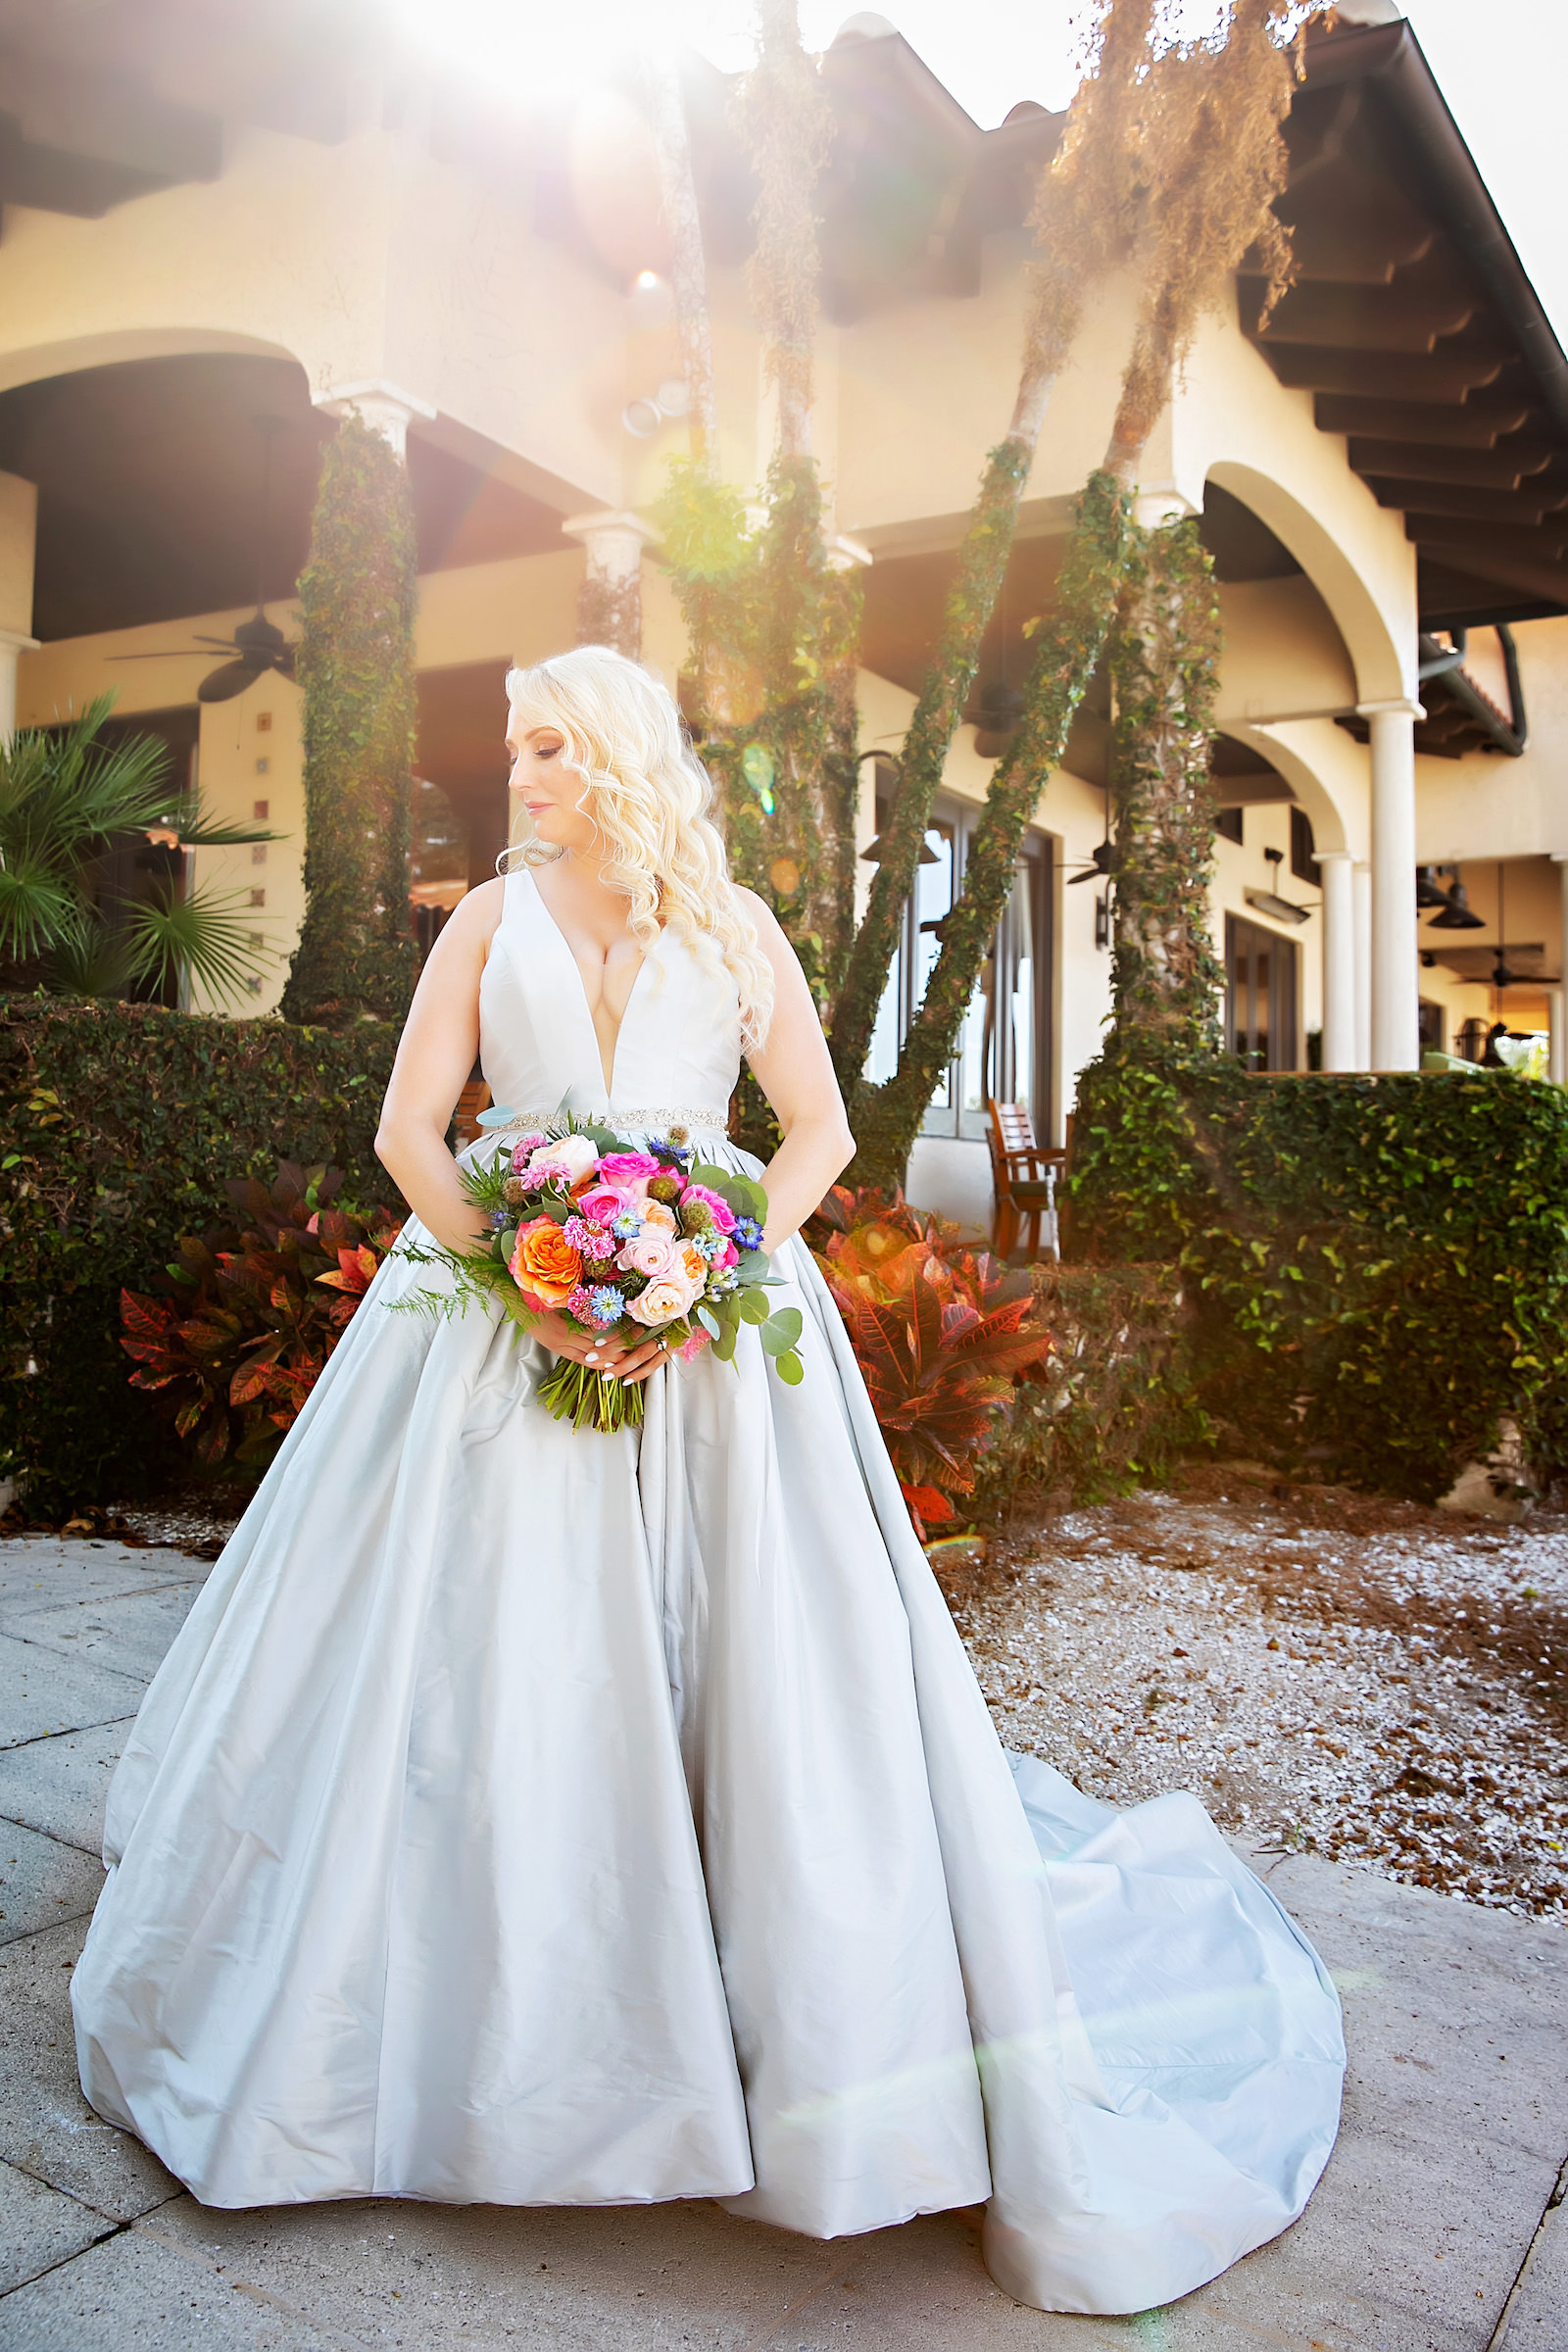 Bride in Deep V Classic Wedding Ballgown Portrait | Florida Hair and Makeup Artist Femme Akoi | The Resort at Longboat Key Club | Florida Wedding Photographer Limelight Photography